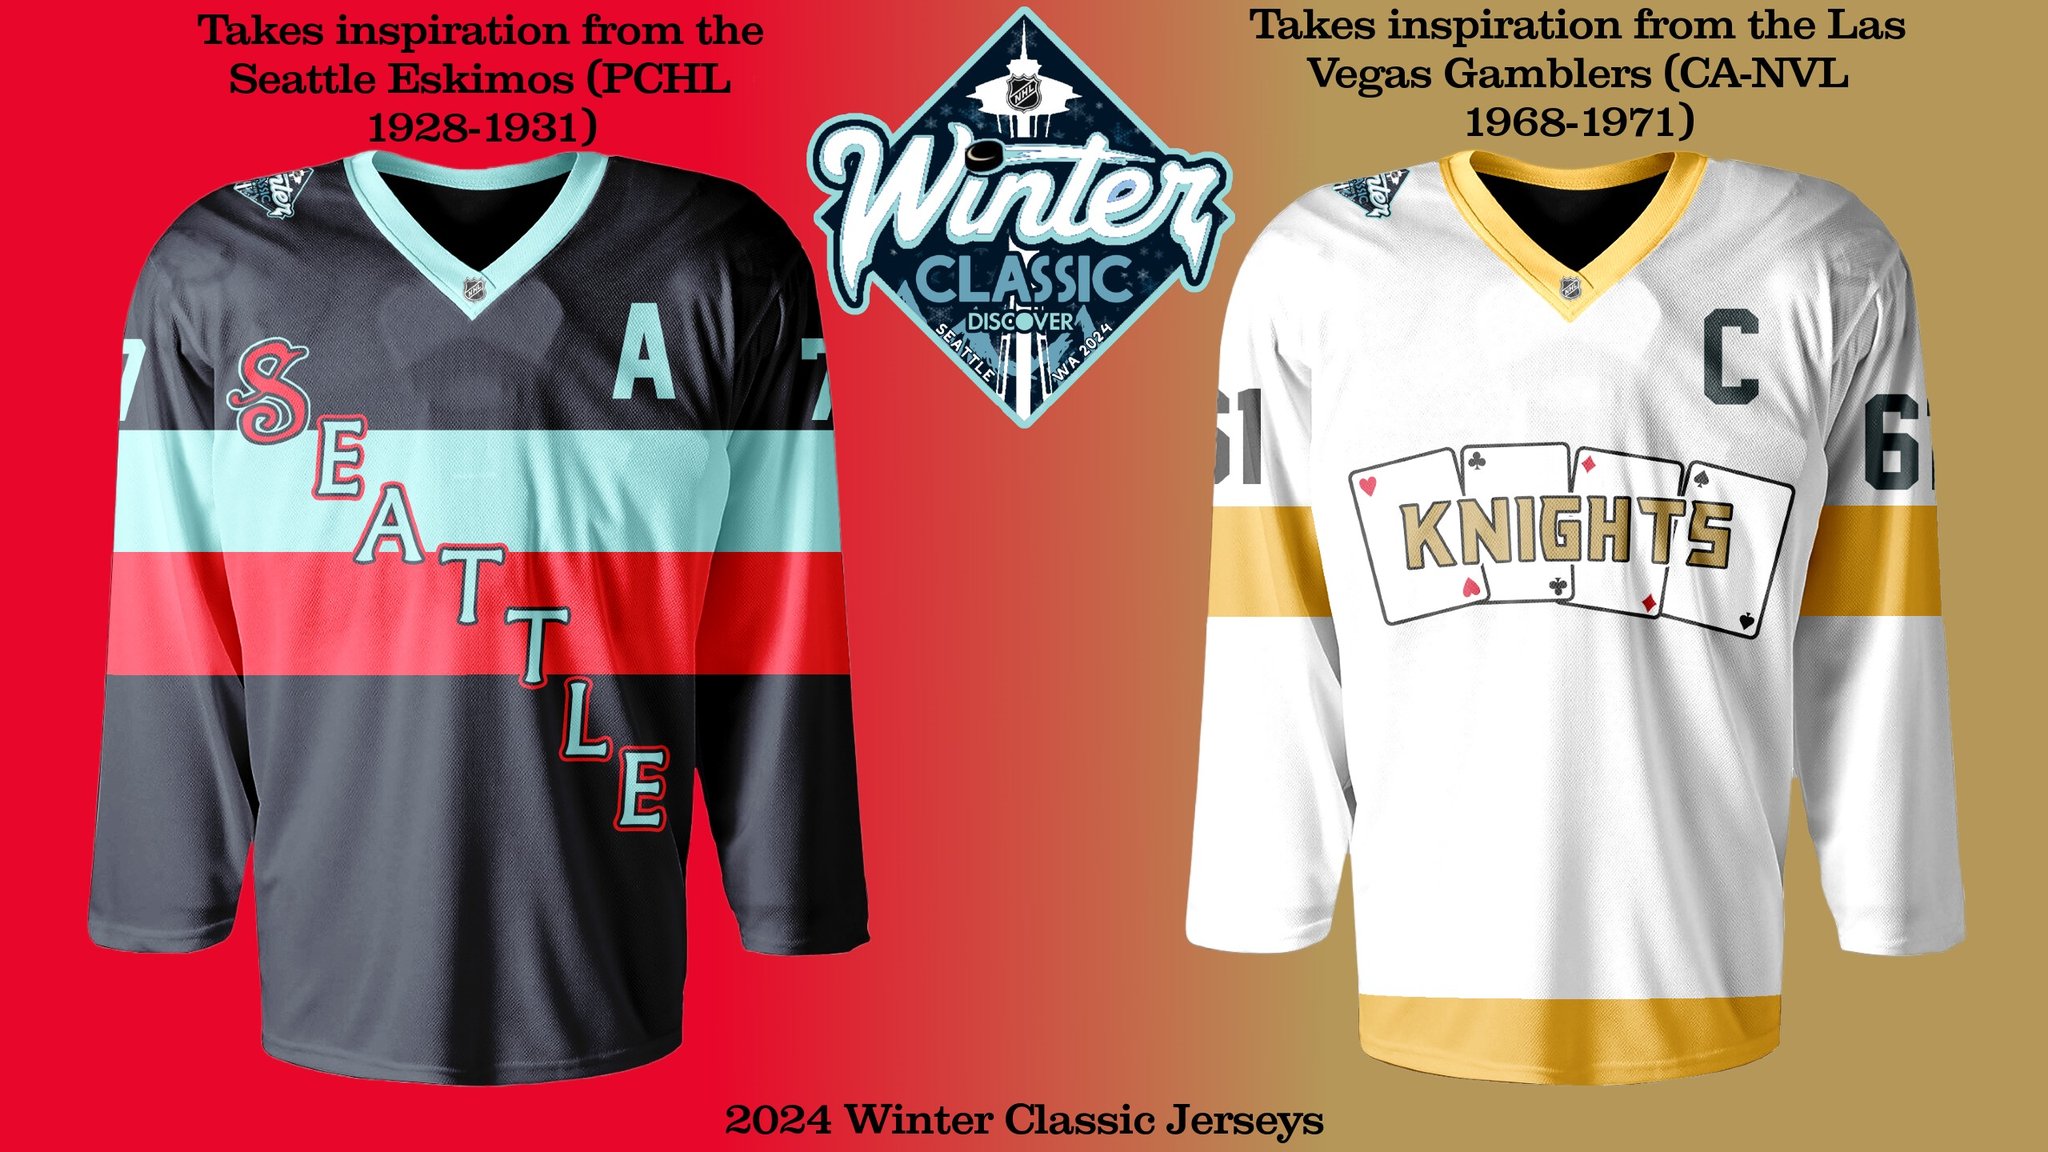 Nashville Predators on X: See the #WinterClassic jersey up close